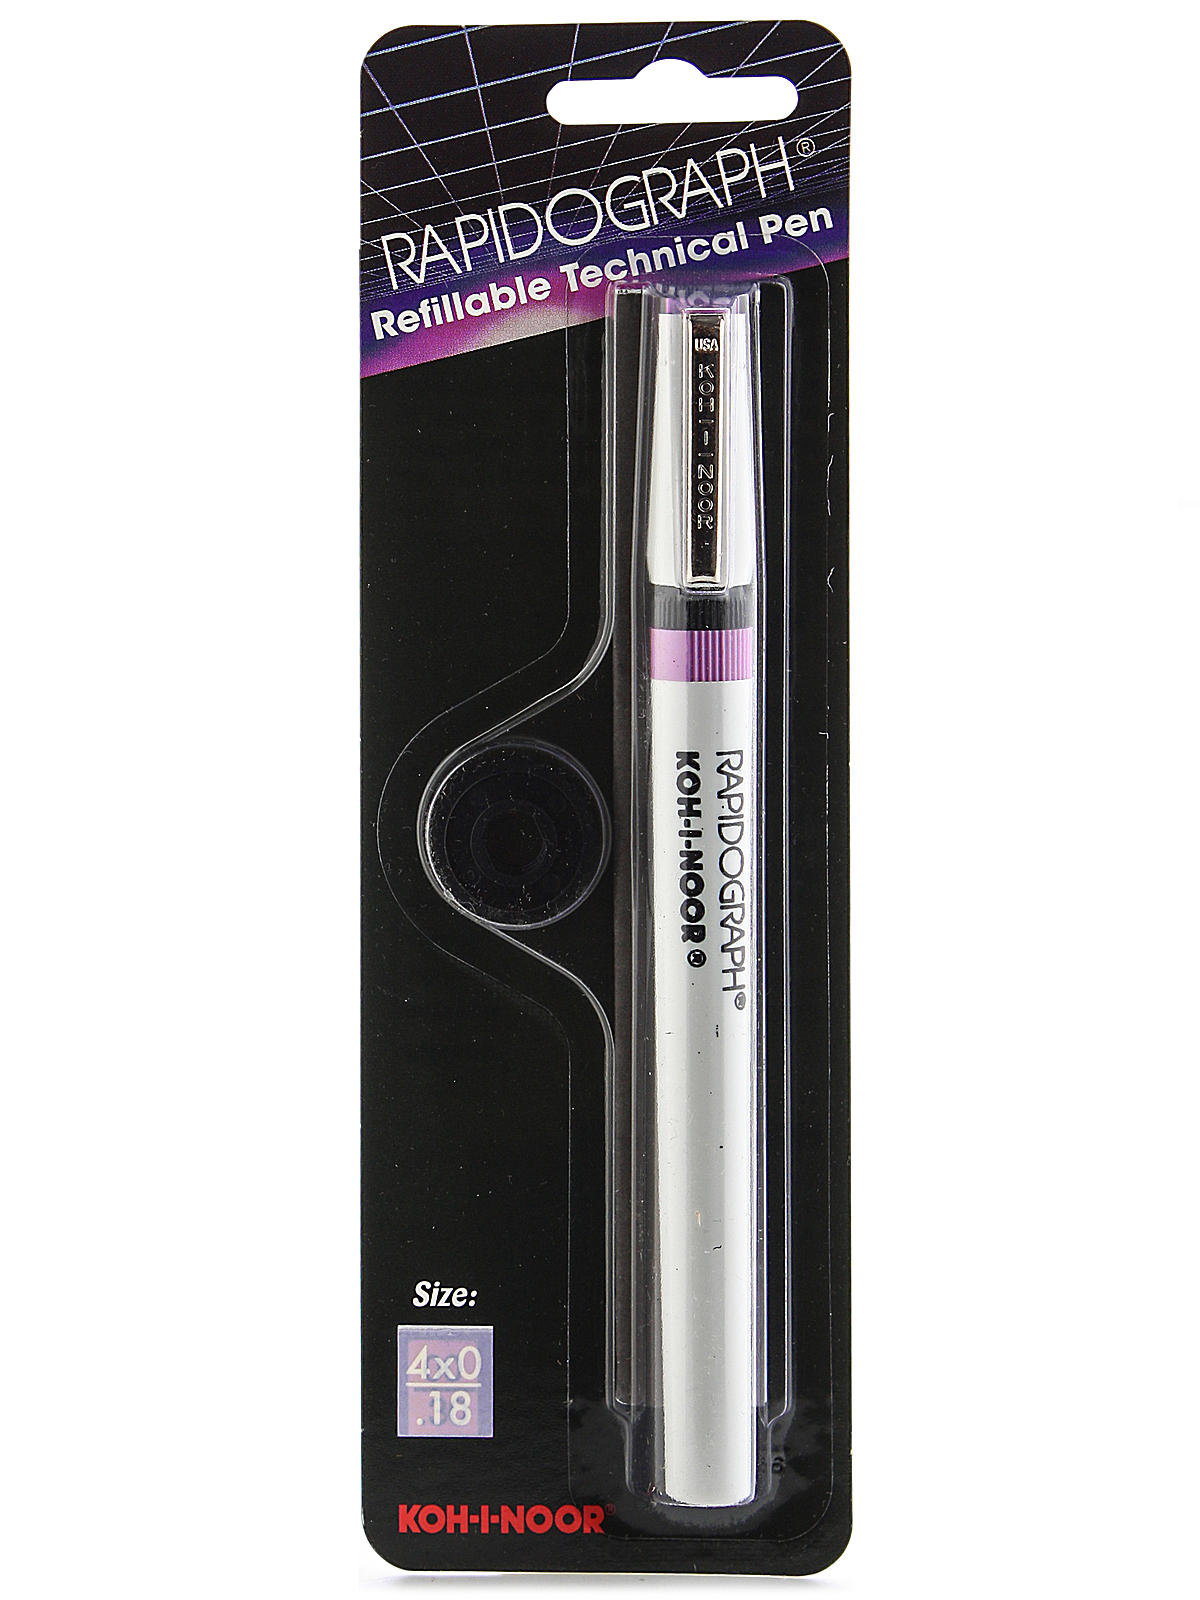 Rapidograph Technical Pens No. 3165 0.18 Mm